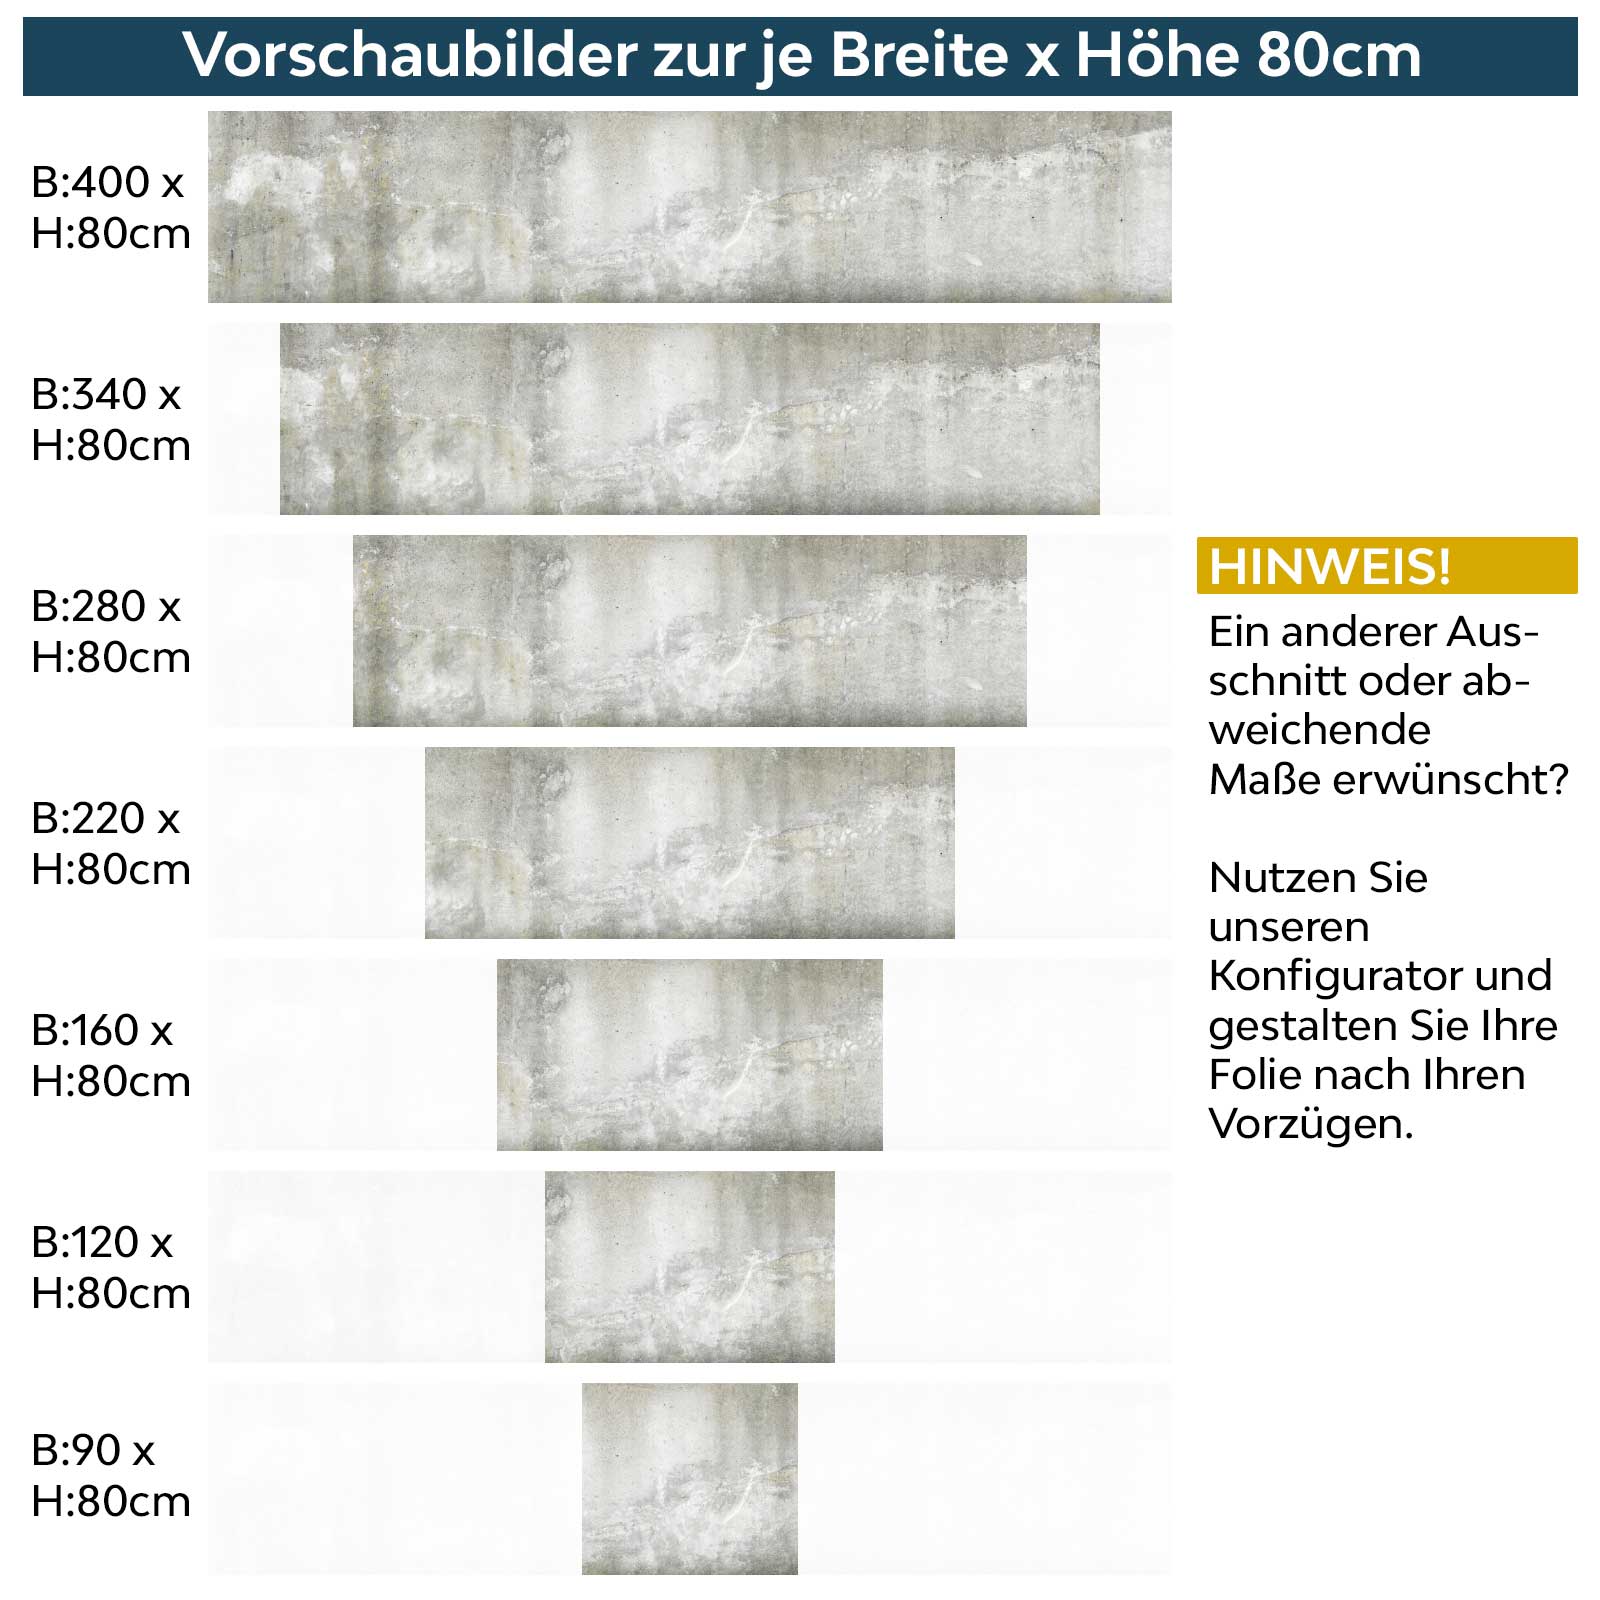 https://www.folien21.de/images/product_images/original_images/kuechenrueckwand-folie/steinwand/057/kuechenrueckwand-folie-betonoptik-v80.jpg